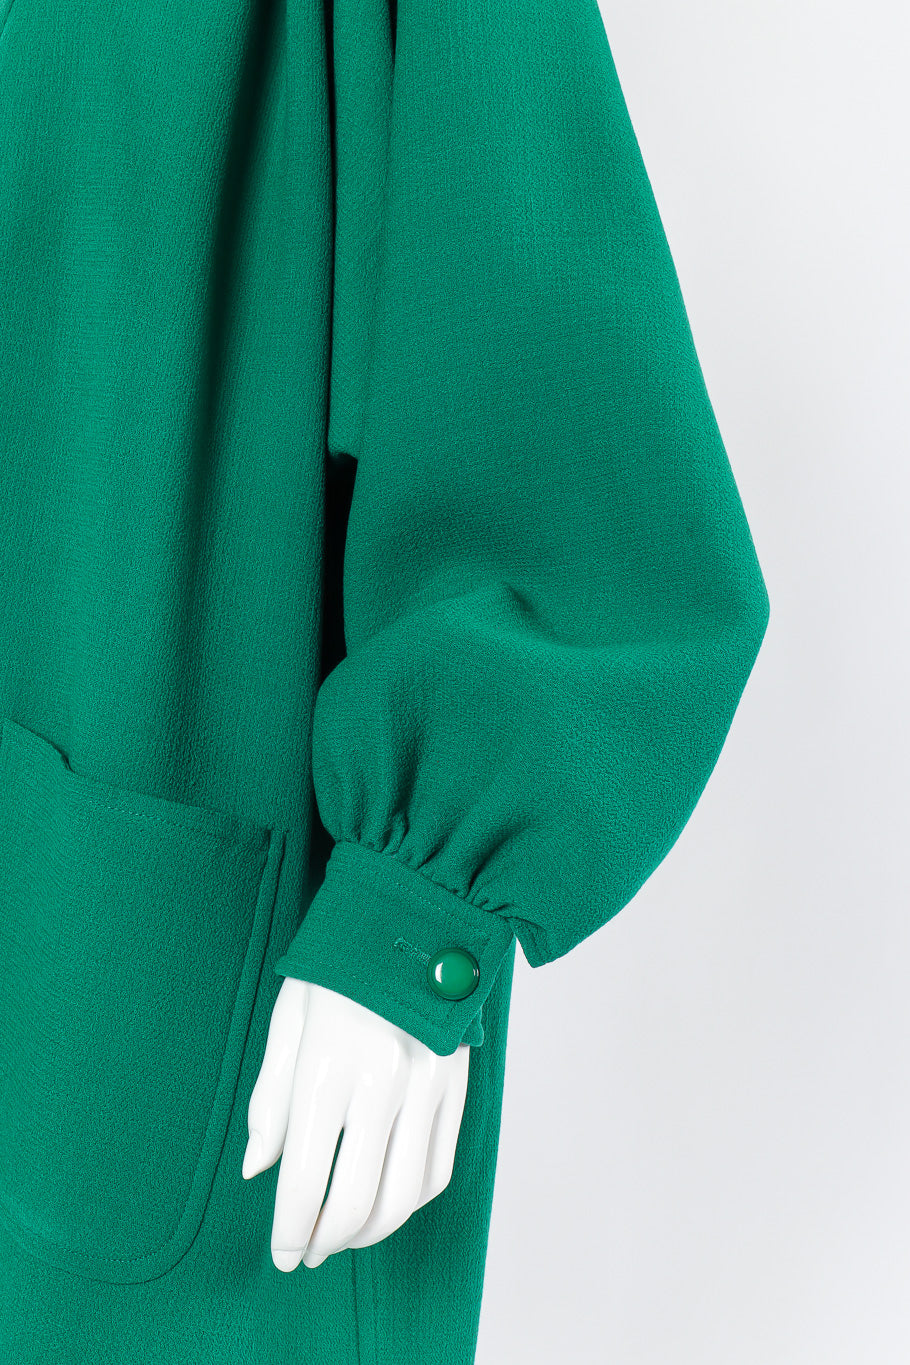 Valentino oversize wool jacket sleeve detail @recessla